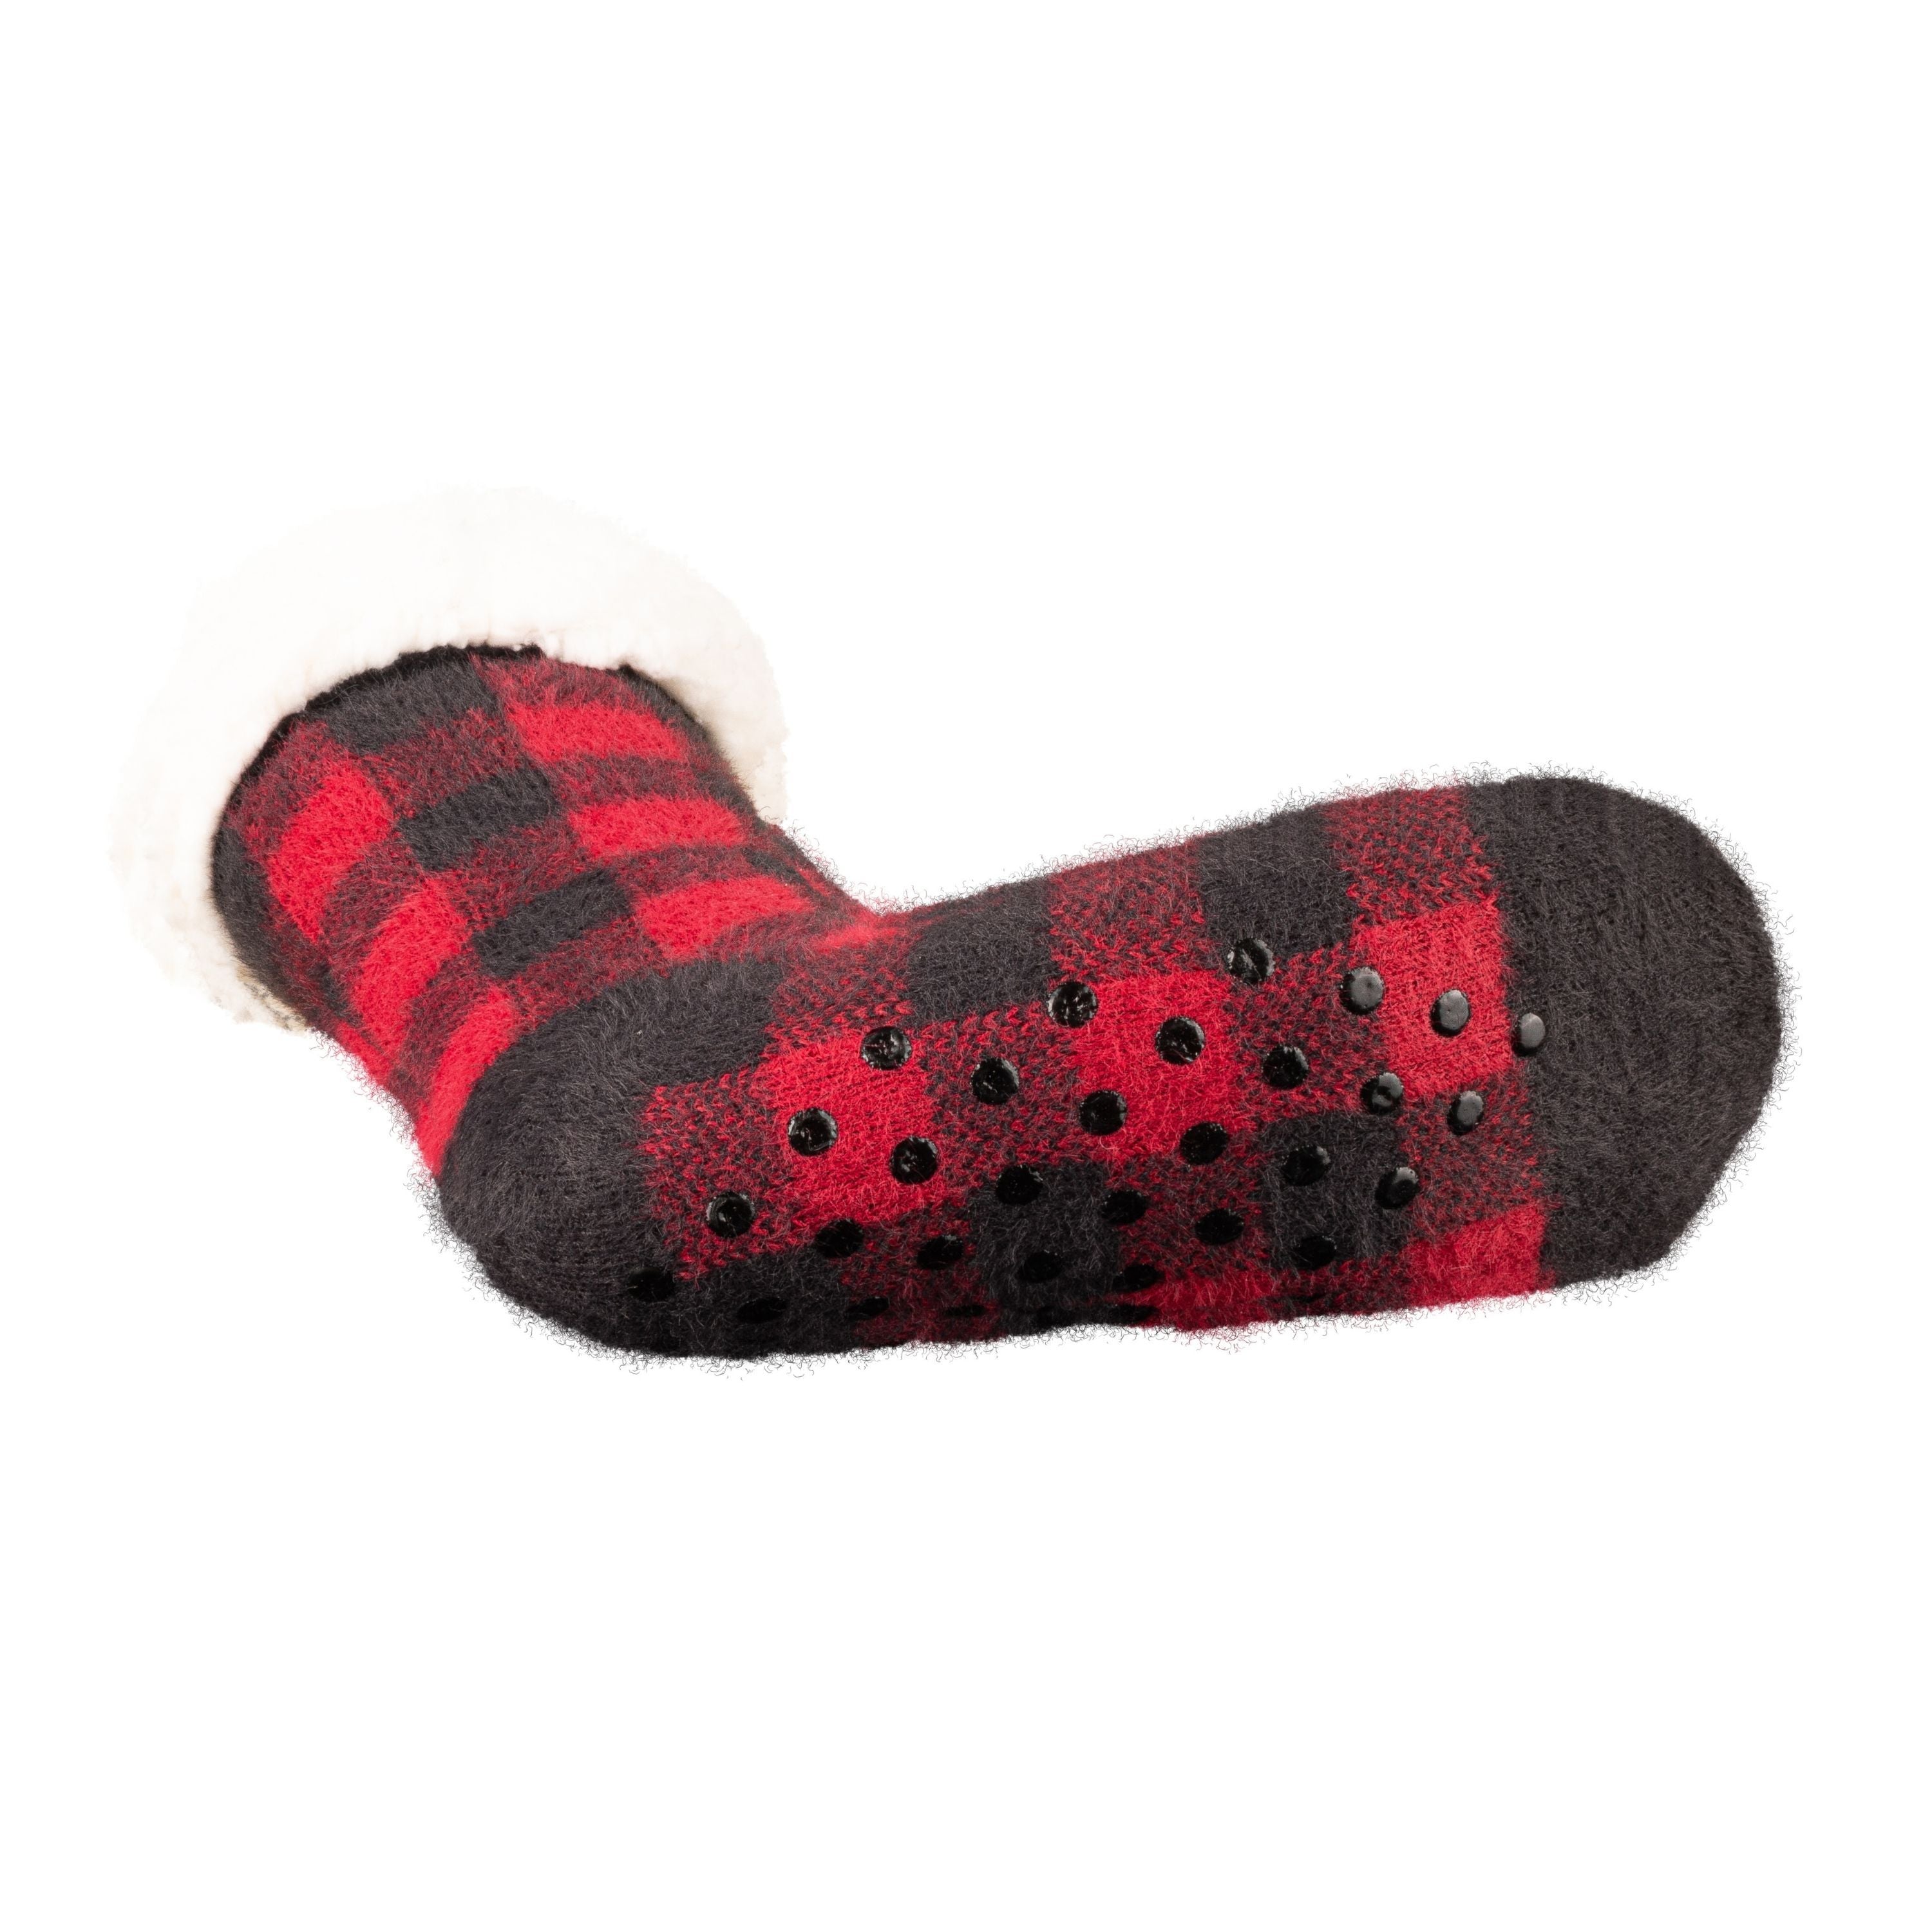 Chaussettes pantoufles "Lindau" - Junior||"Lindau" Slippers socks - Youth's